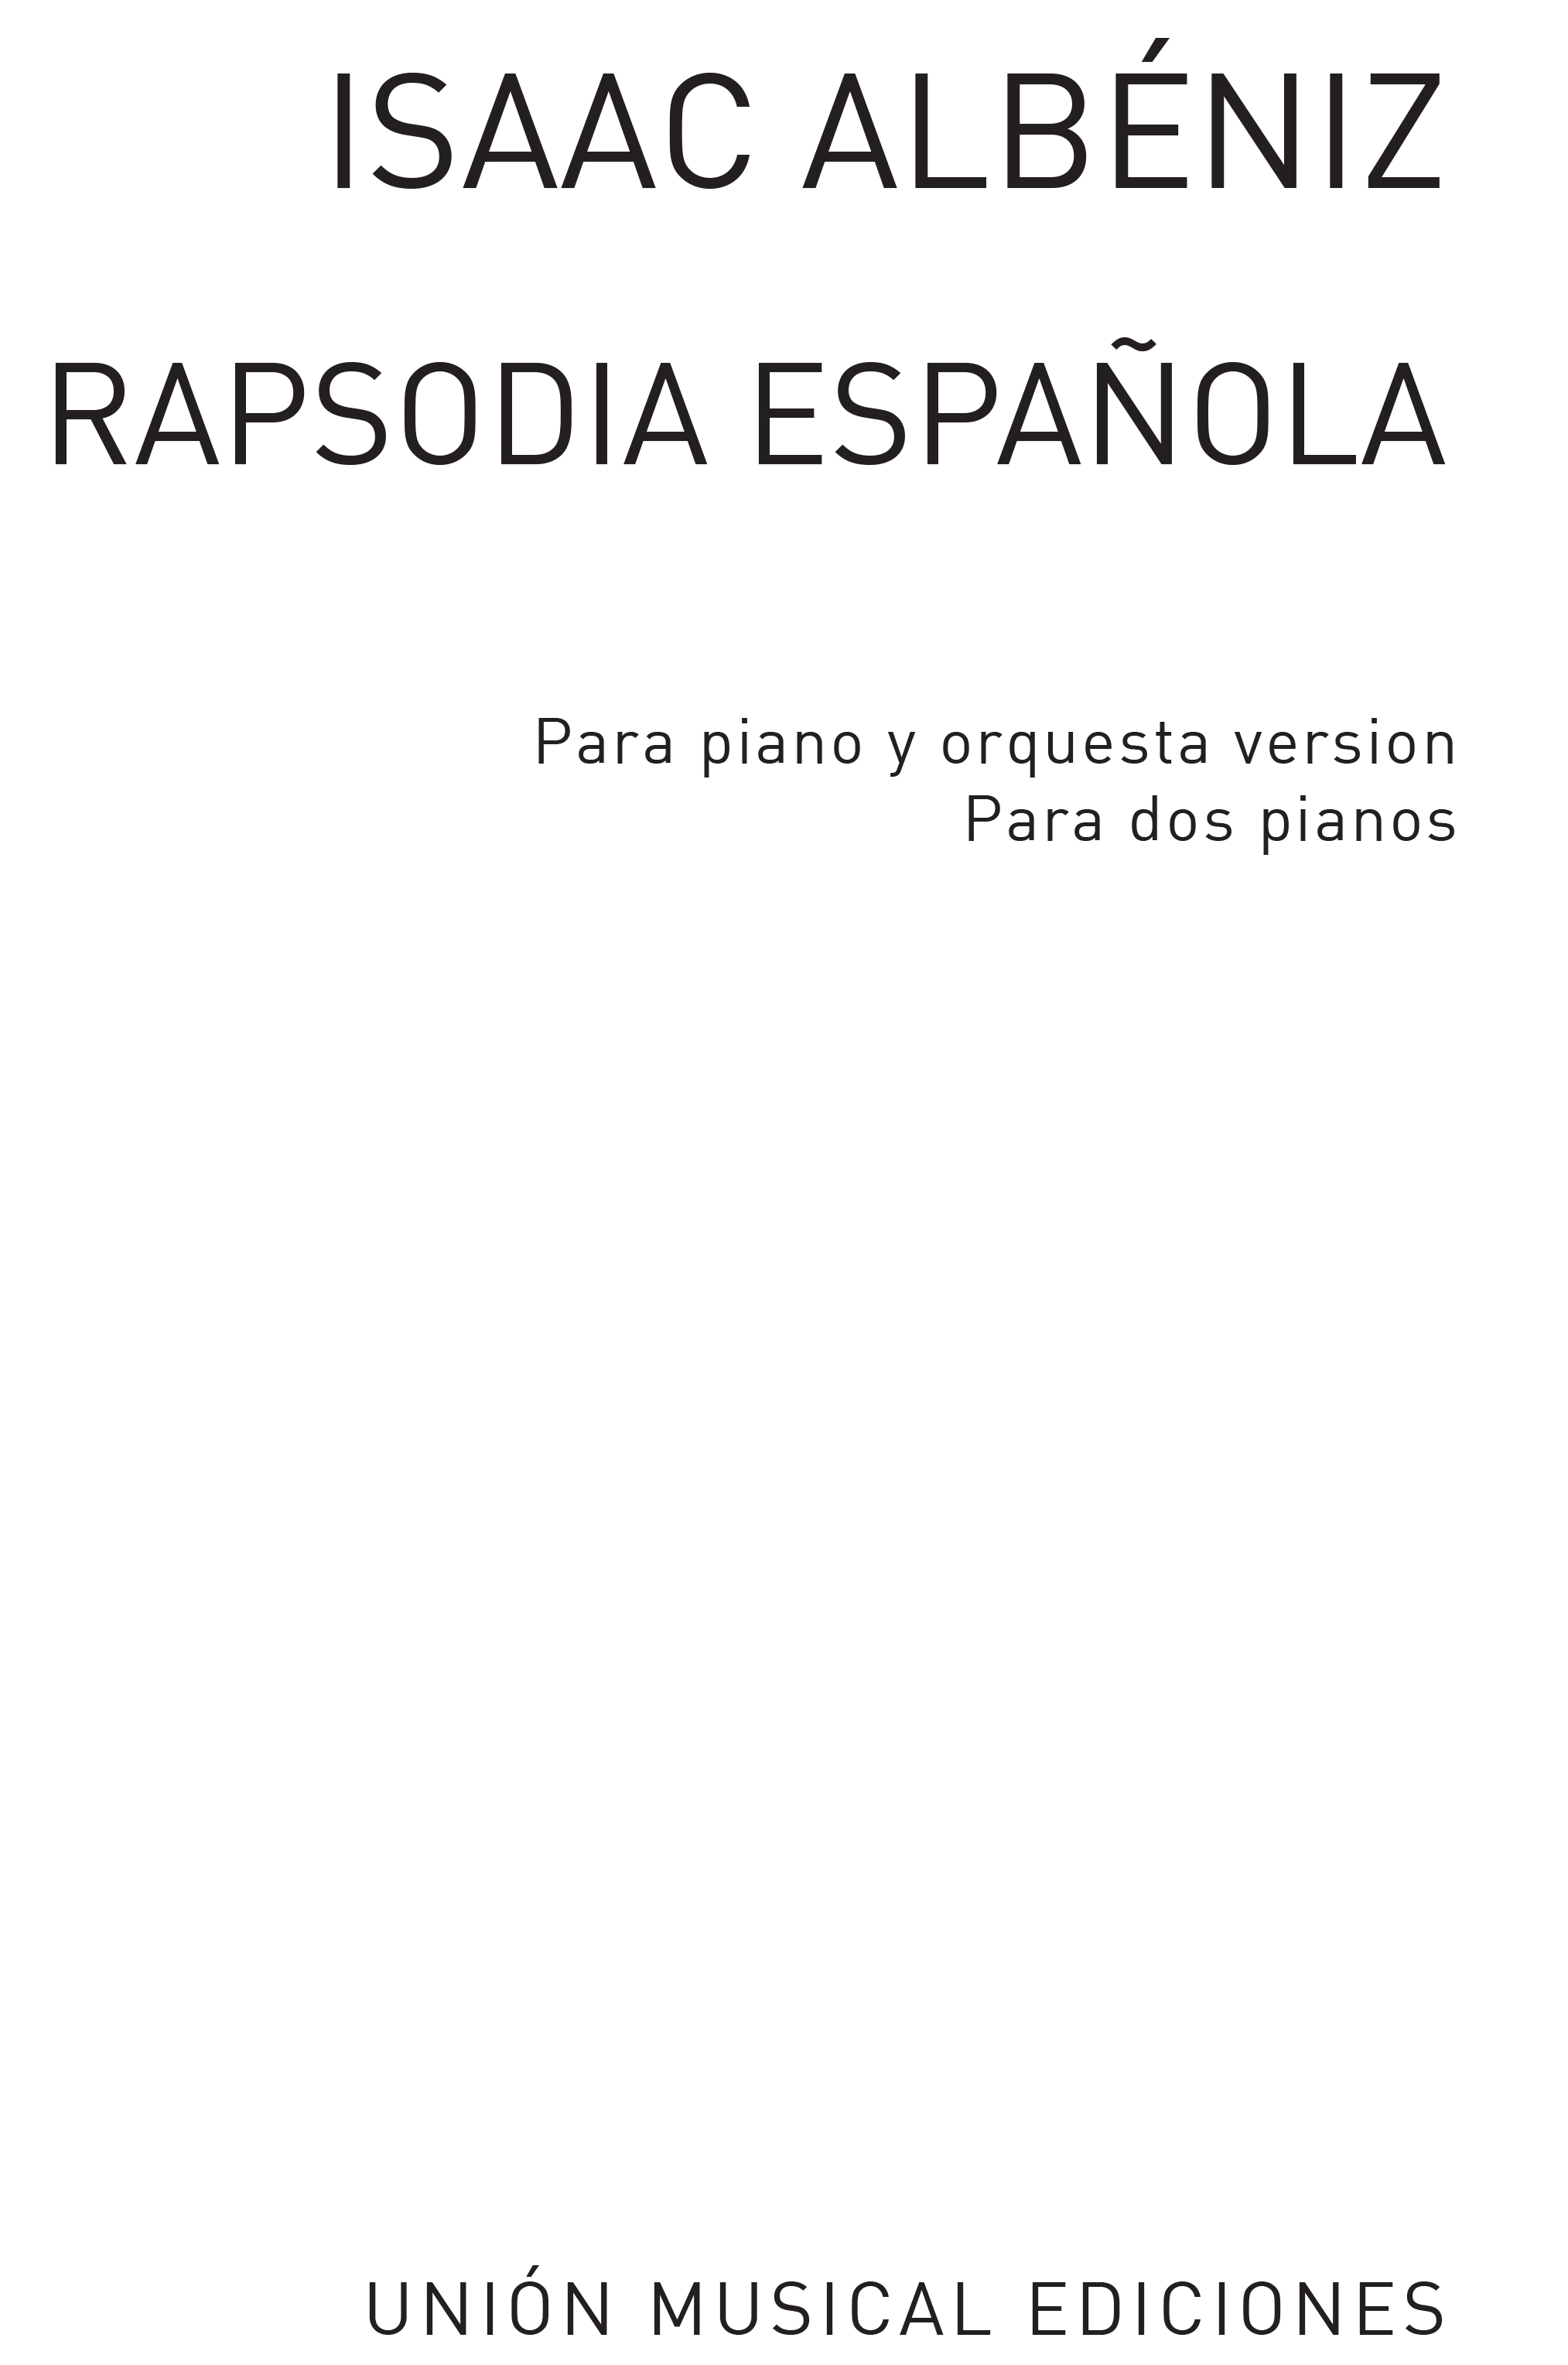 Isaac Albéniz: Albeniz Rapsodia Espanola (halffter): Piano Duet: Instrumental